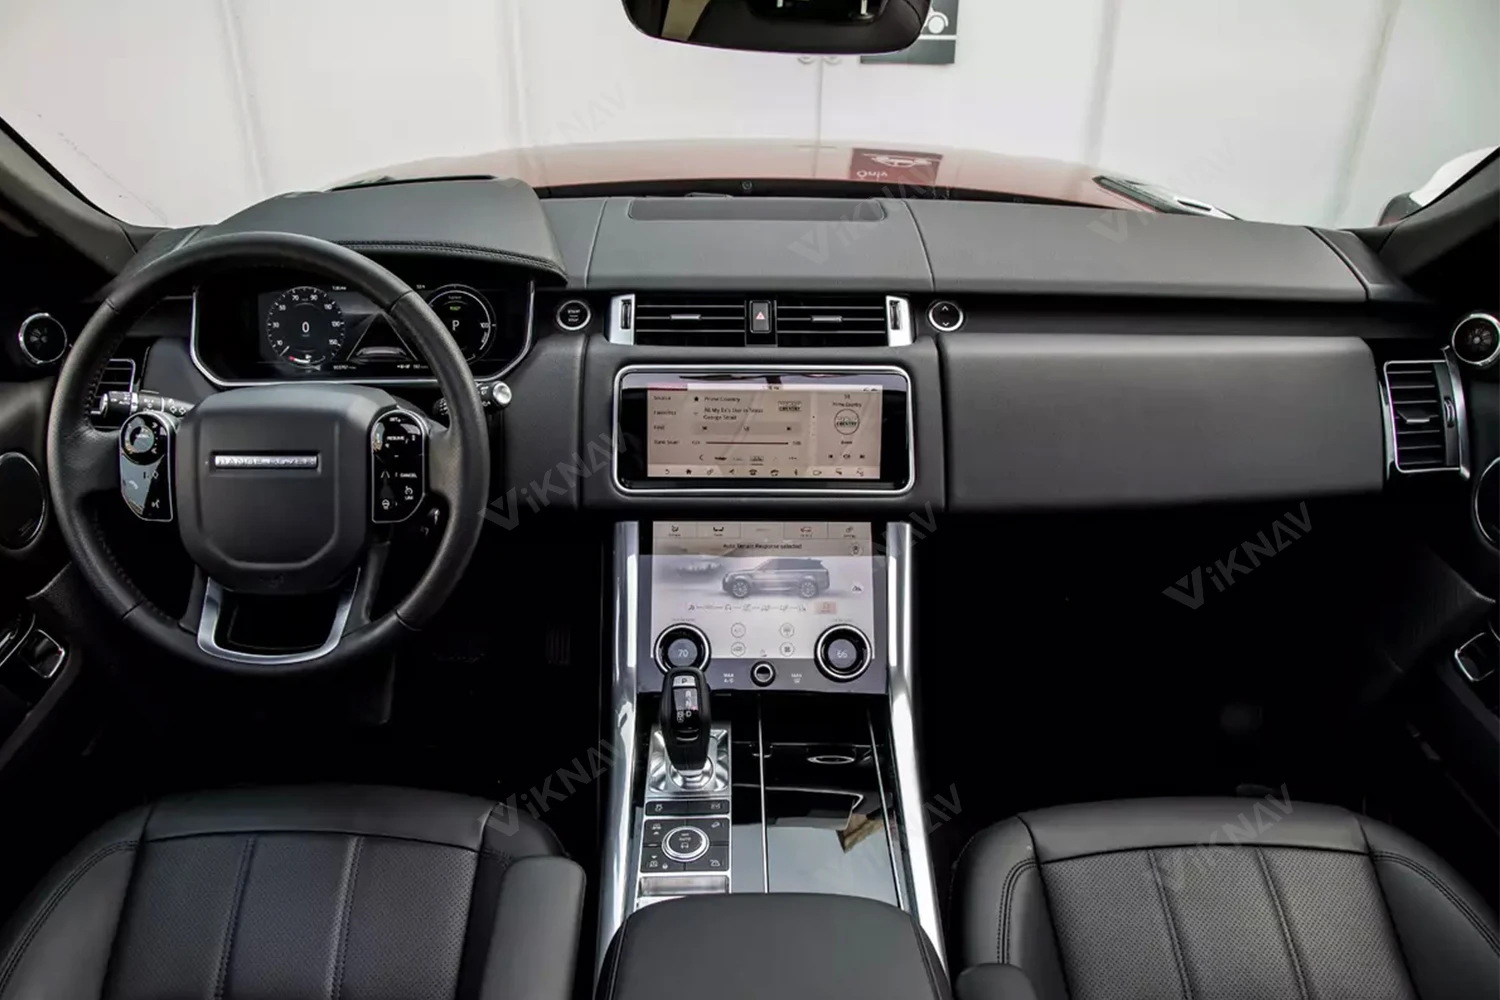 Joyforwa Android Autoradio on X: #Range #Rover Sport with the